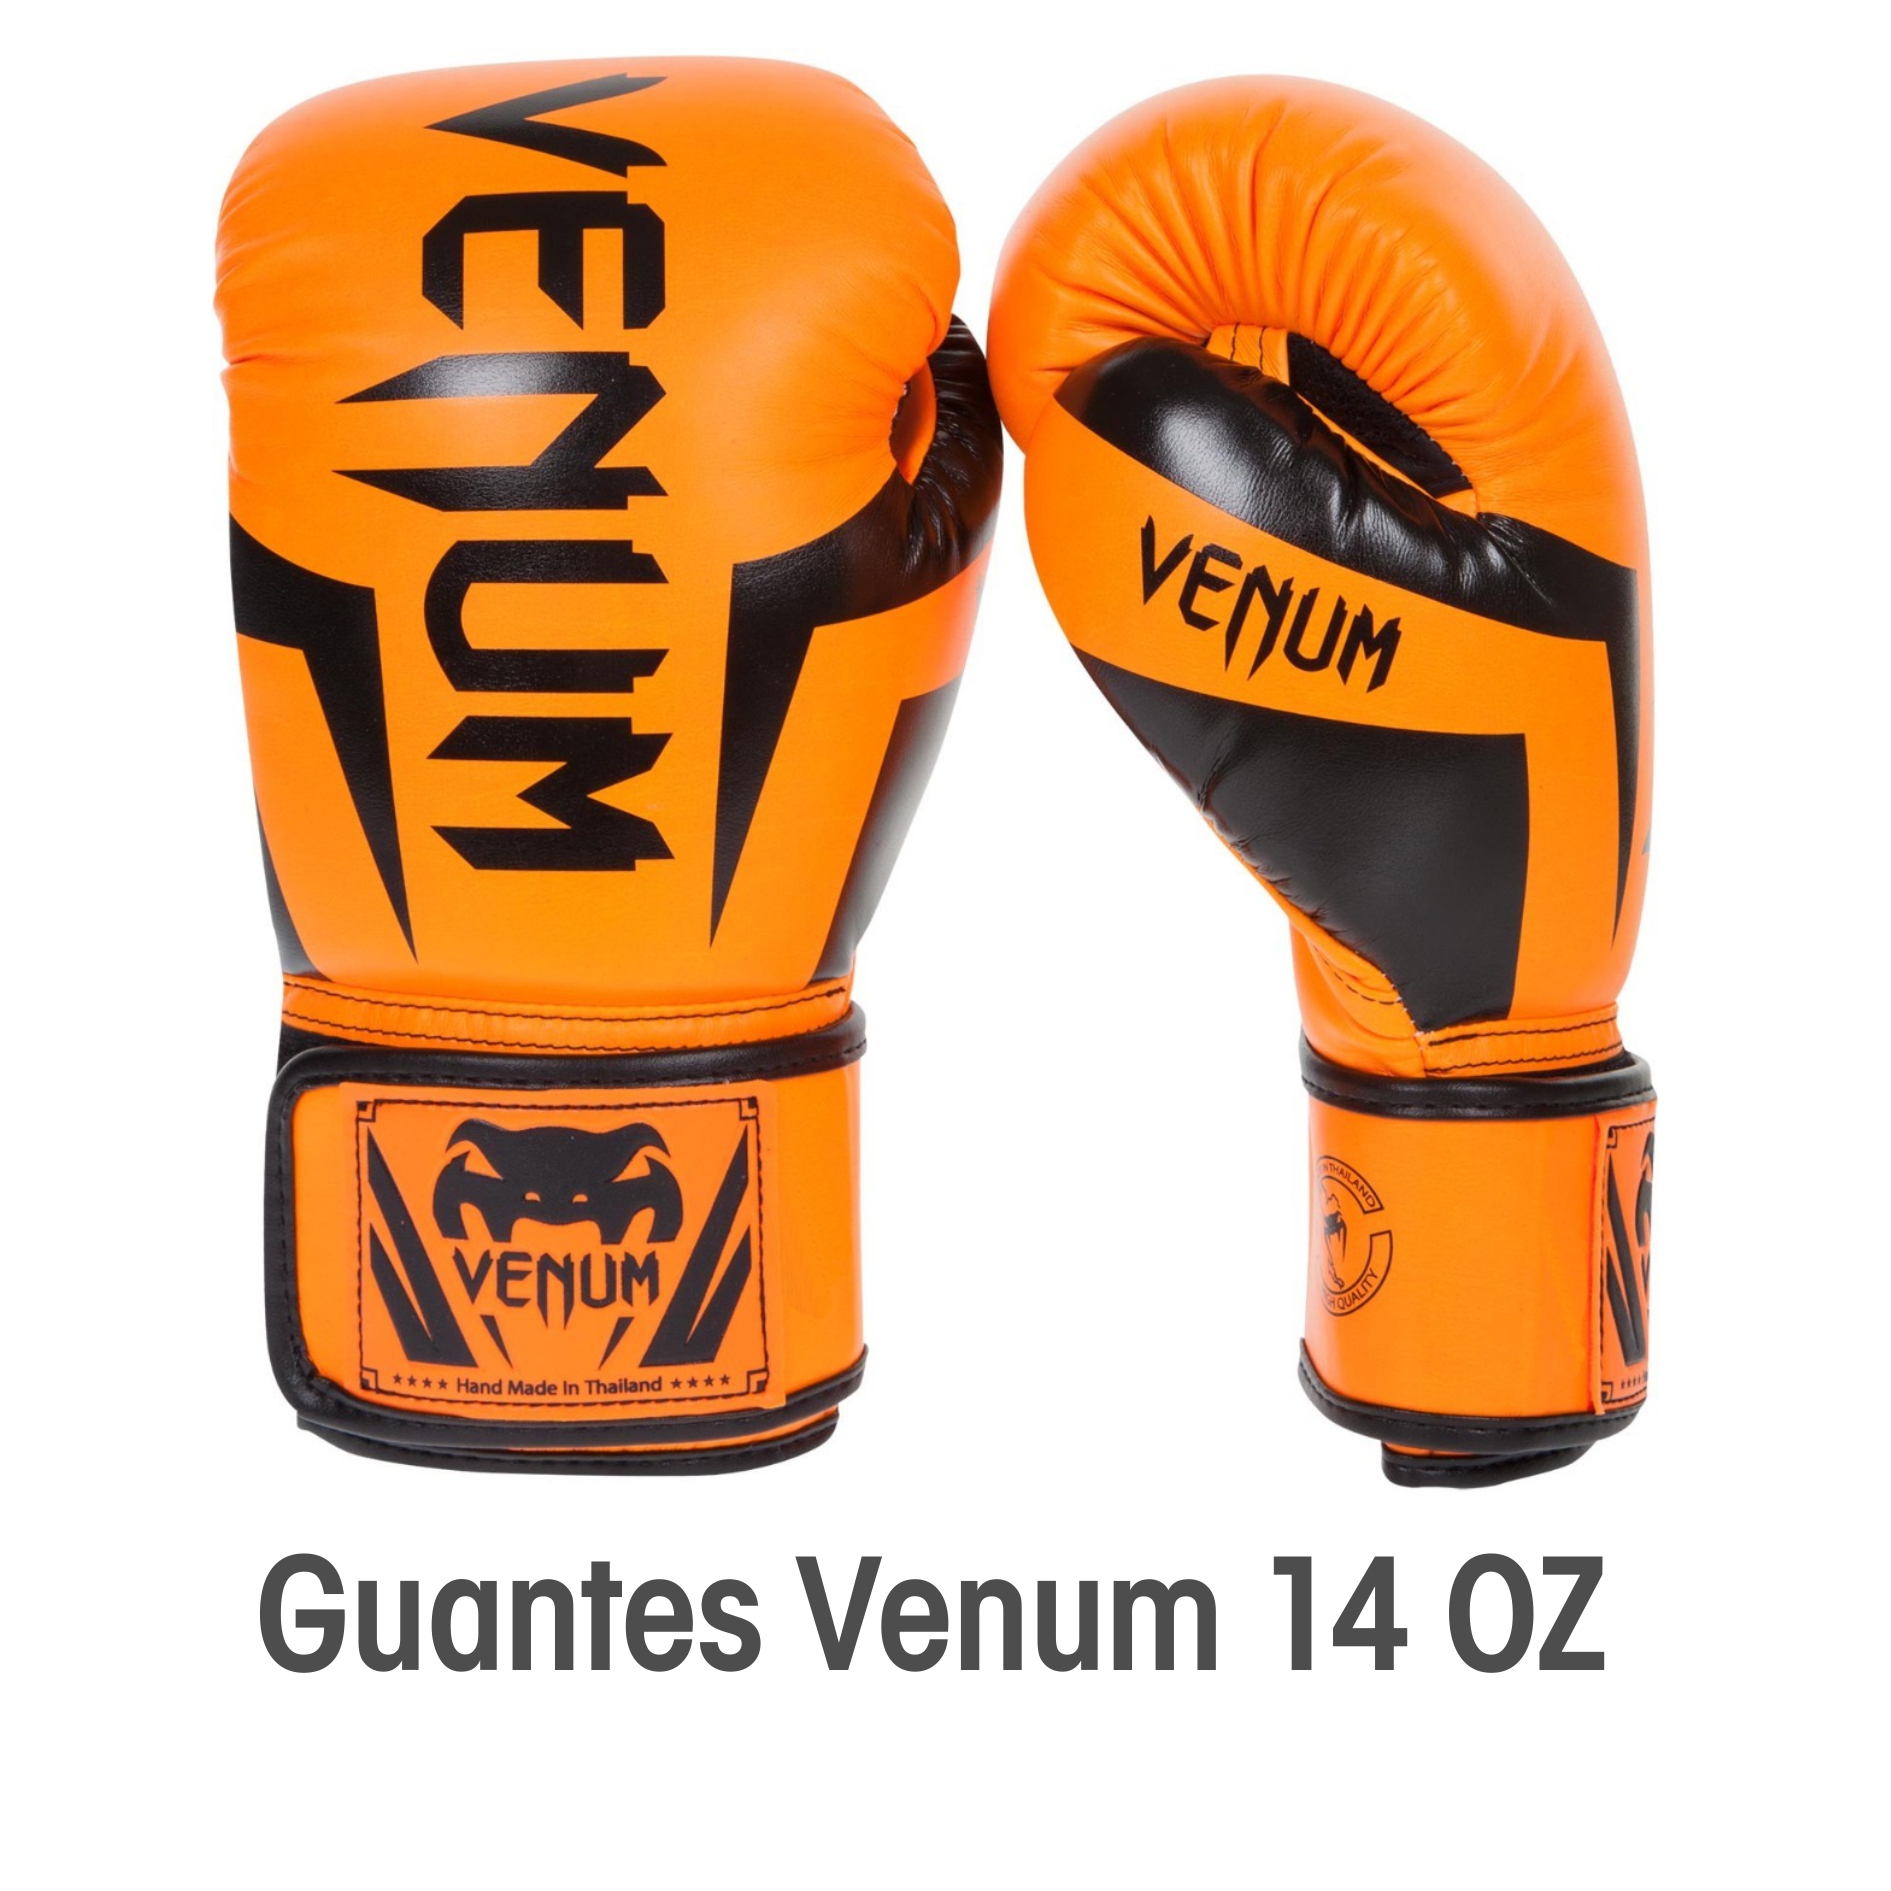 guantes venum 14 oz - Página web de runningsportperu